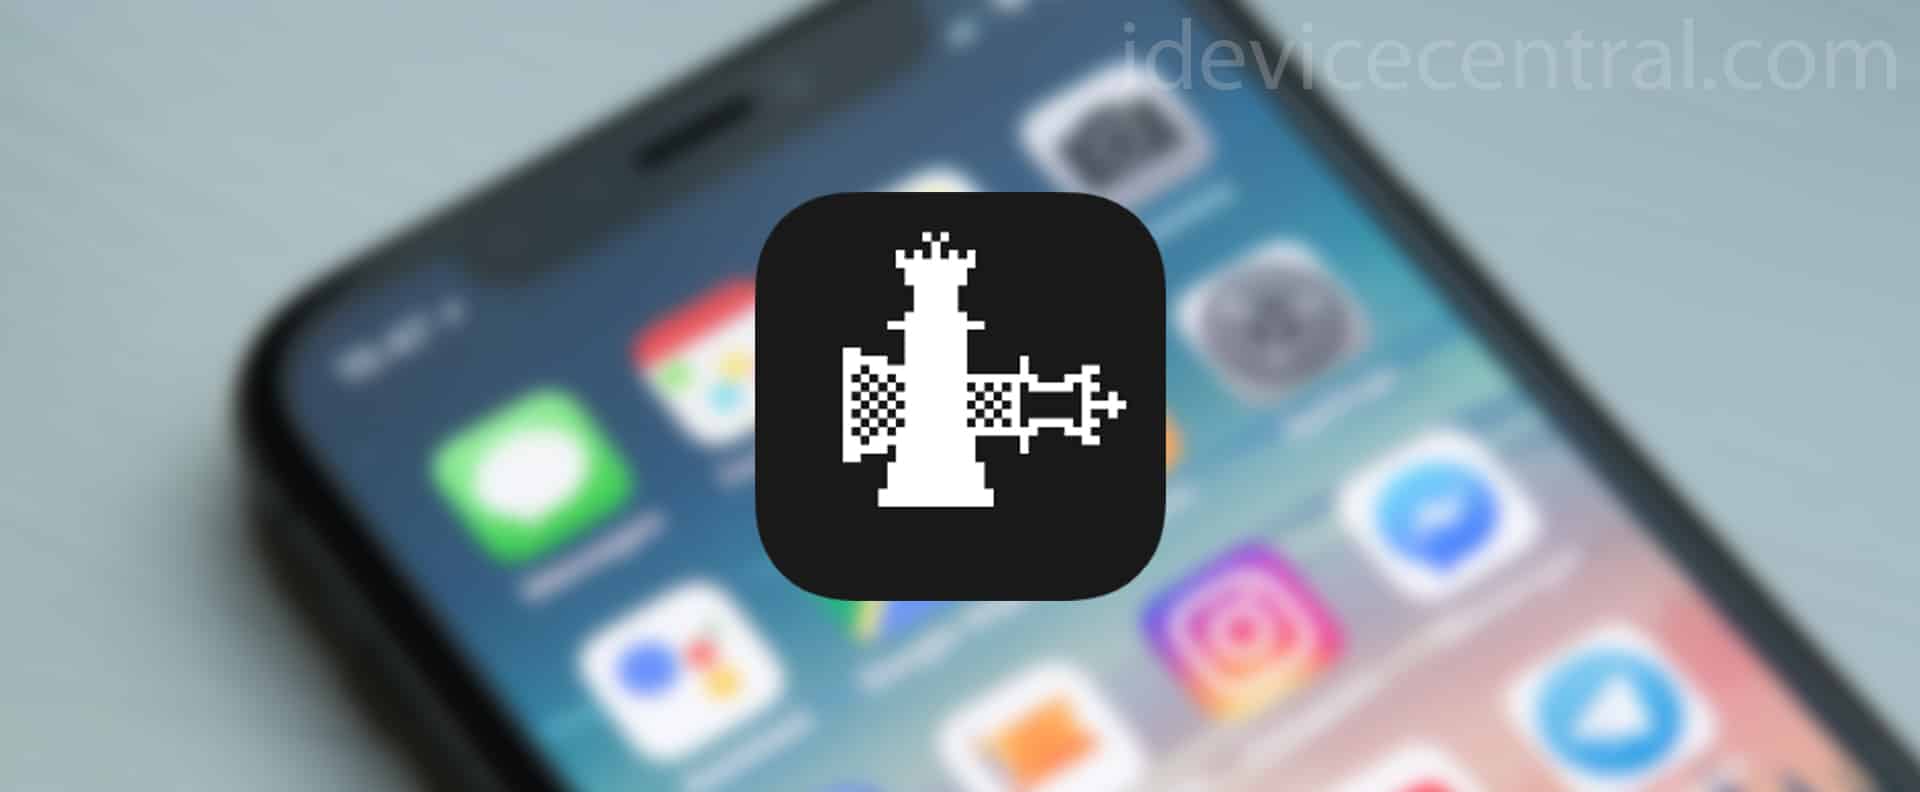 Download checkra1n Jailbreak for iOS 12.0 - iOS 14.8